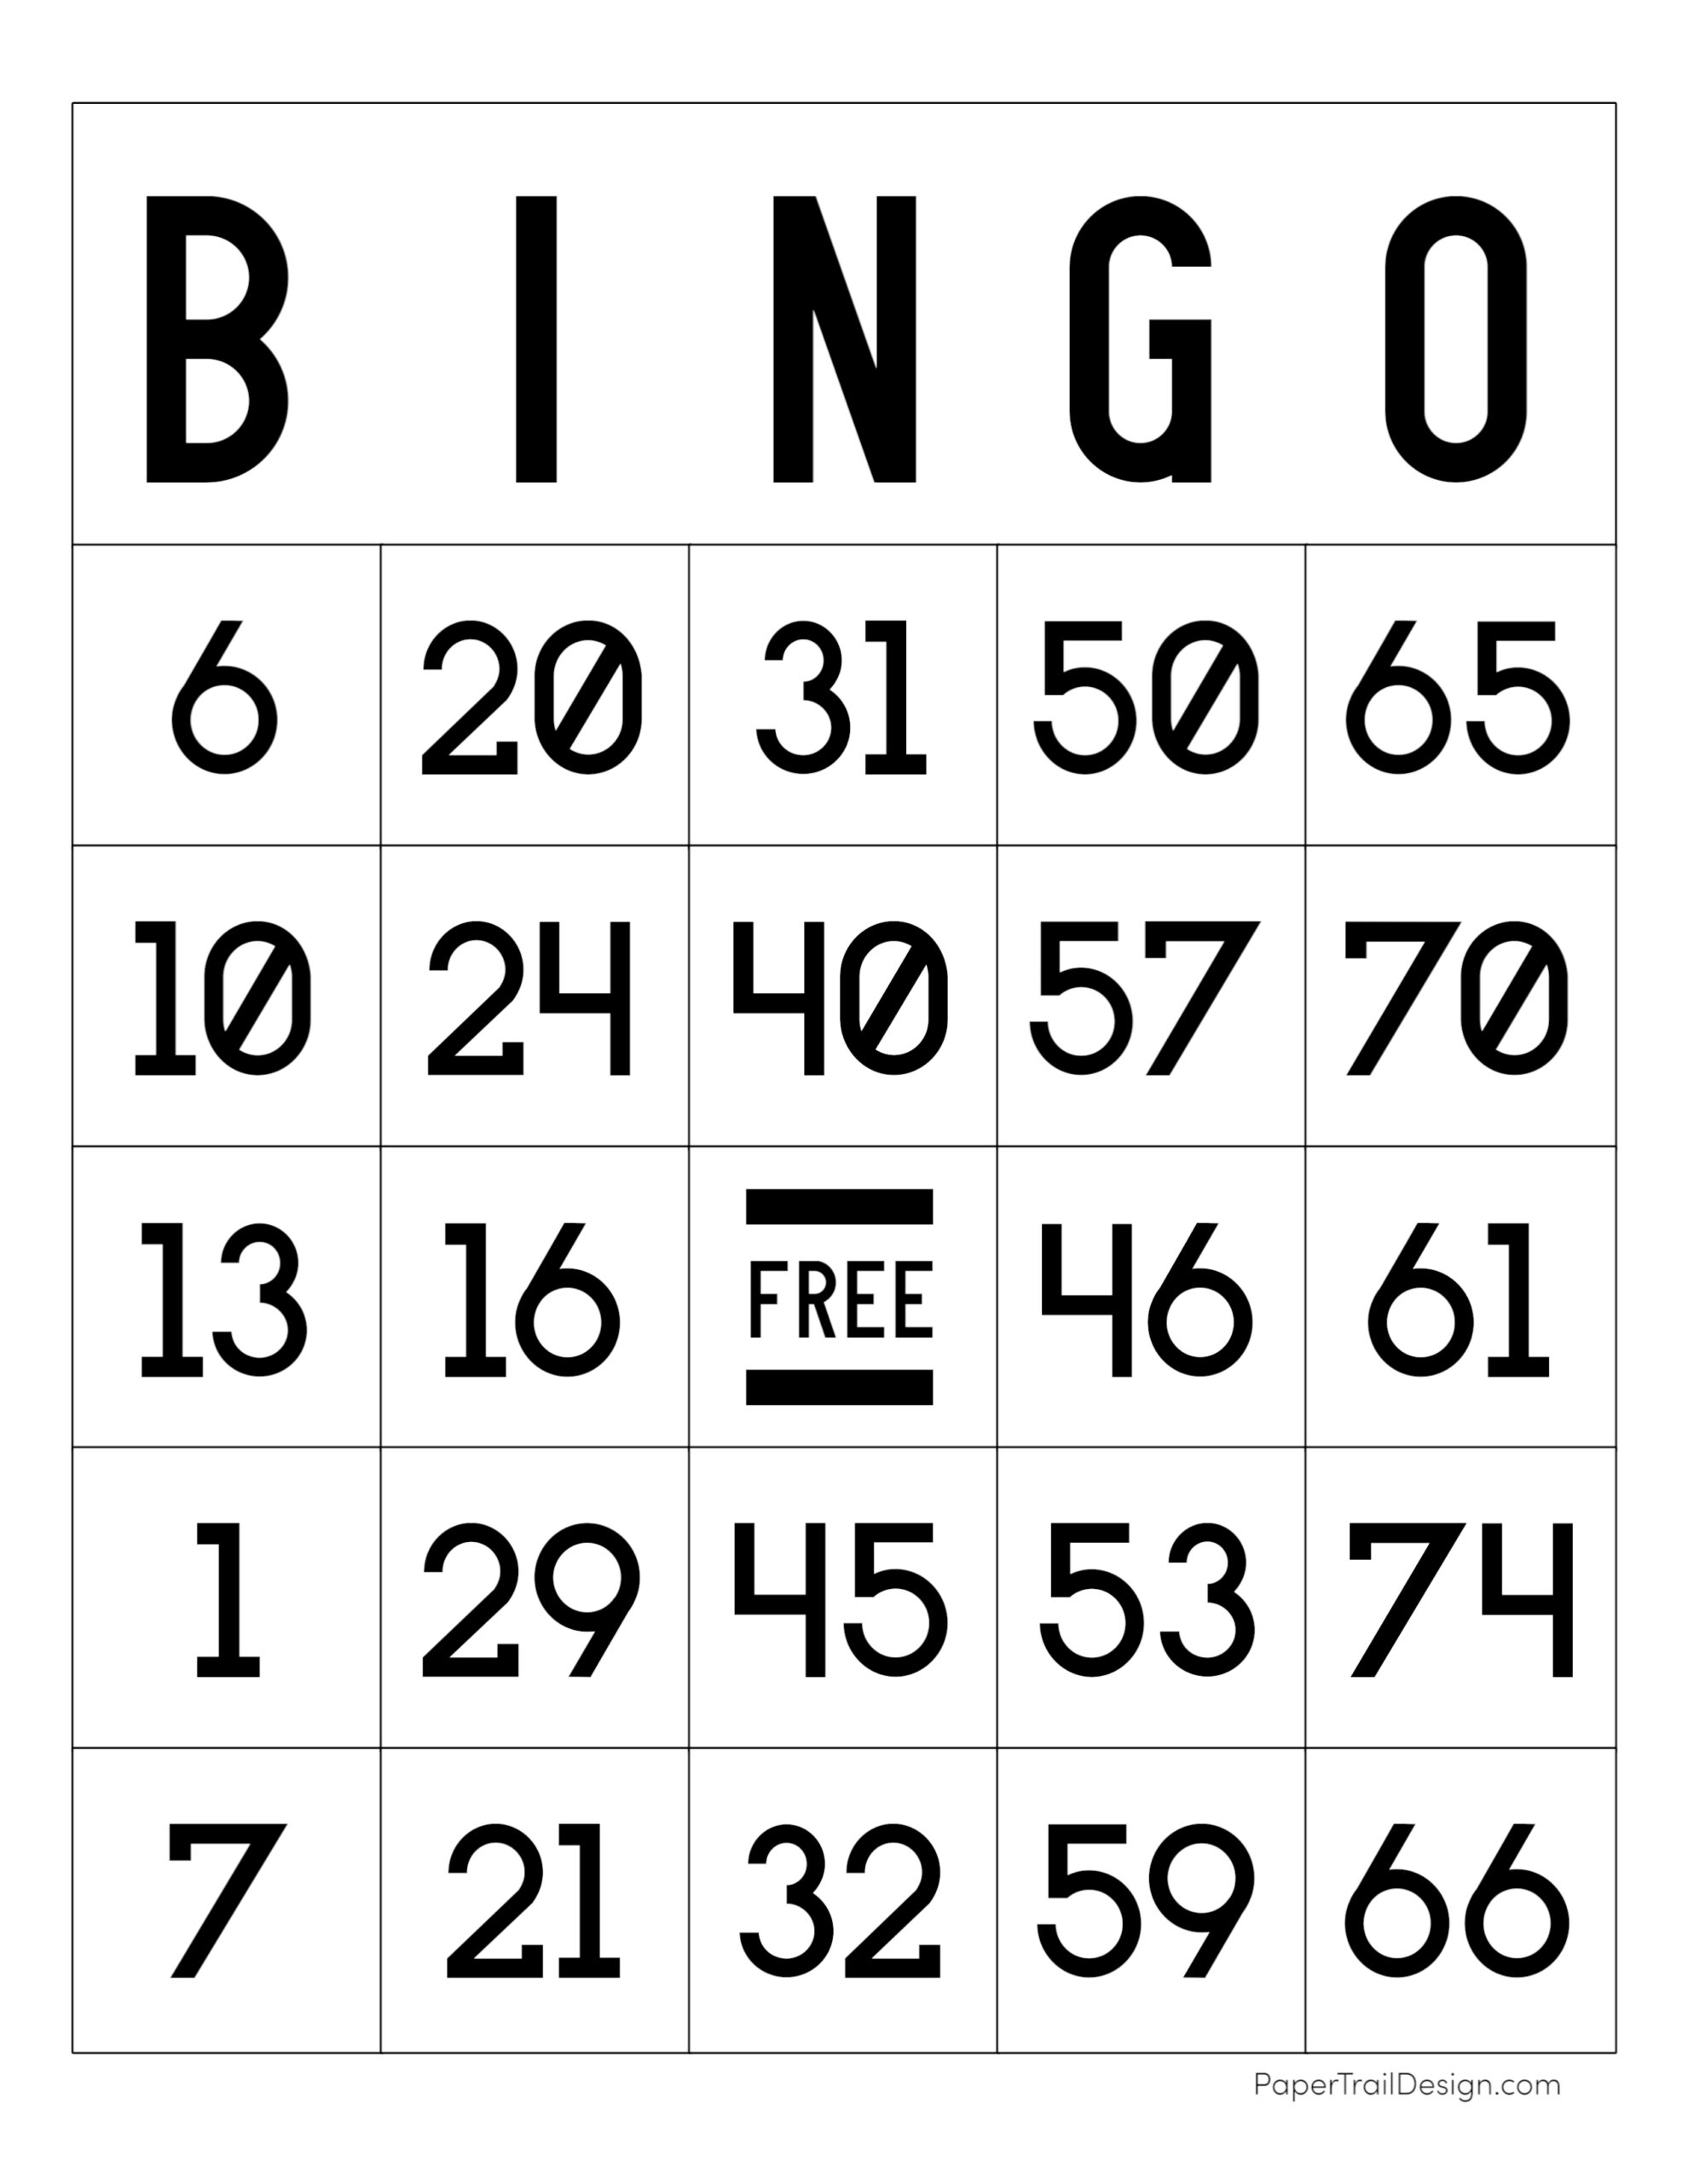 Free Printable Bingo Cards | Paper Trail Design